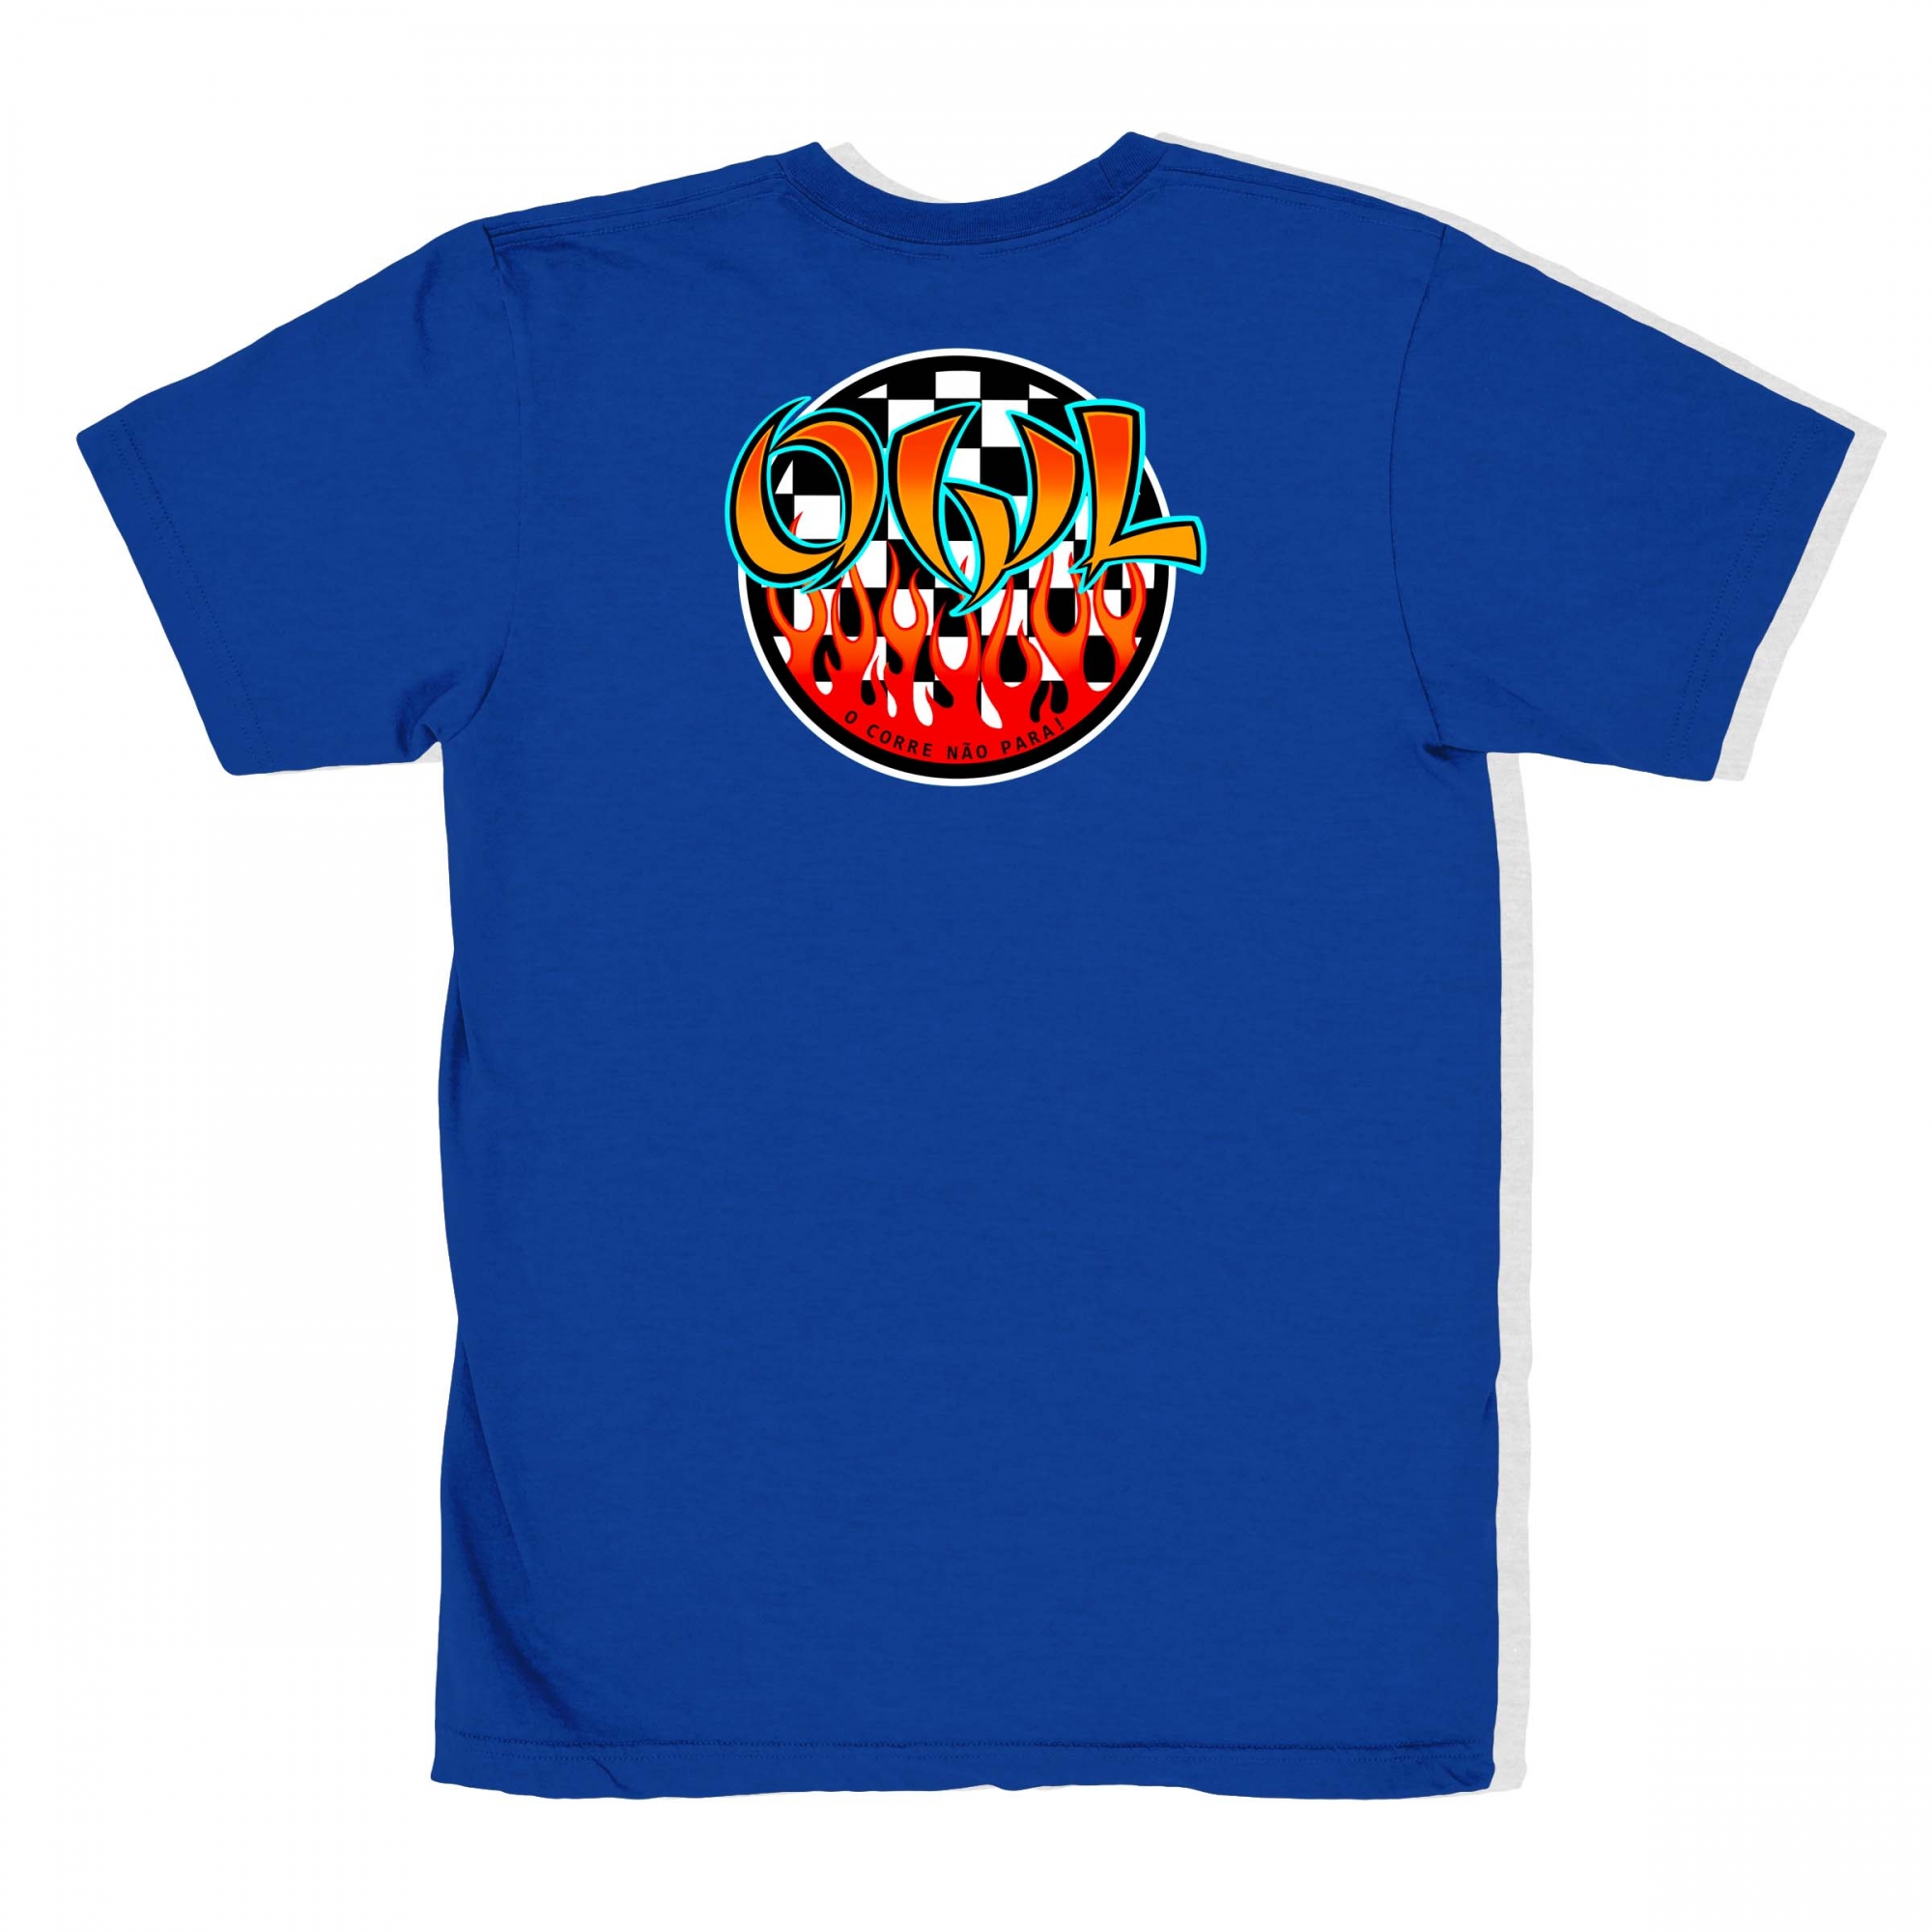 Camiseta OWL Califa - Azul Royal